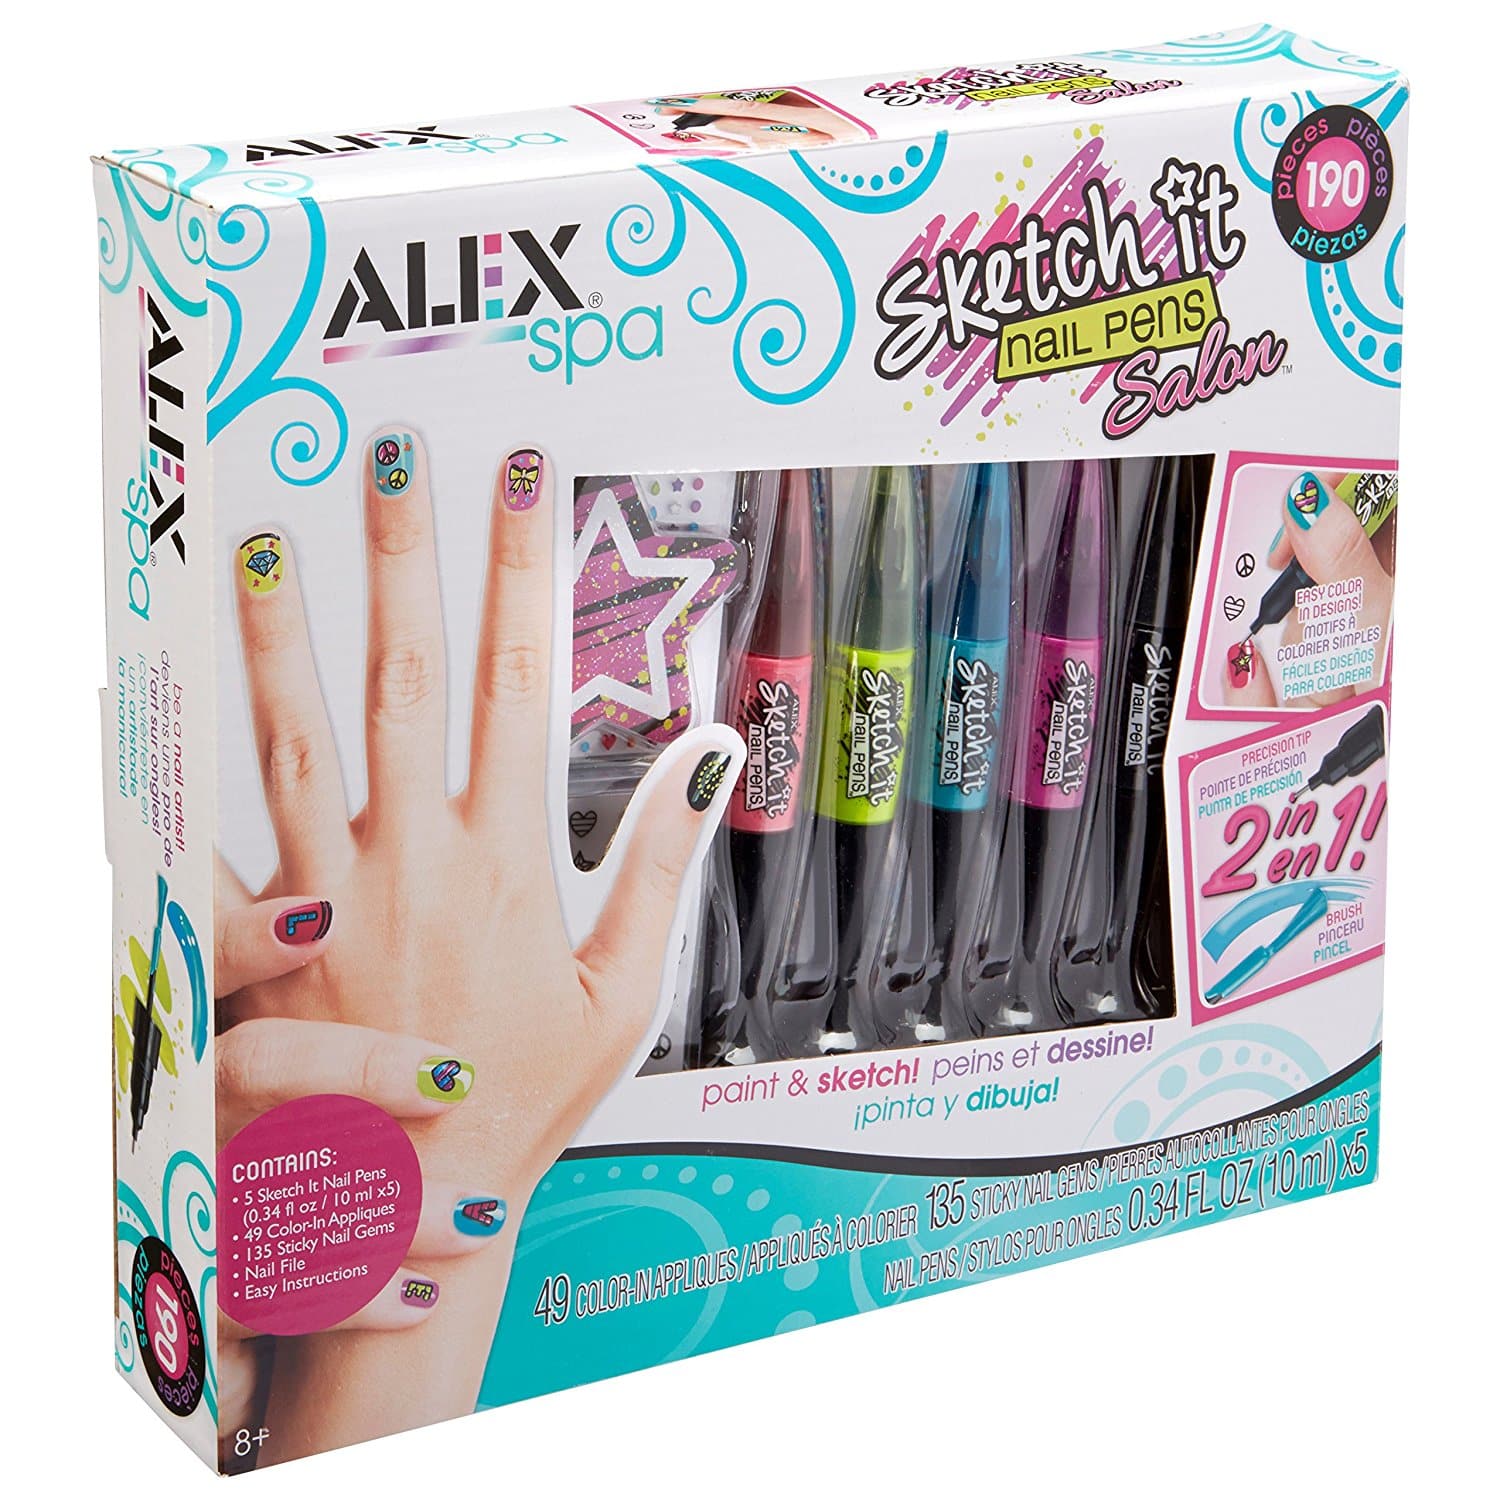 DEAL ALERT: ALEX Spa Sketch It Nail Pens Salon 60% off